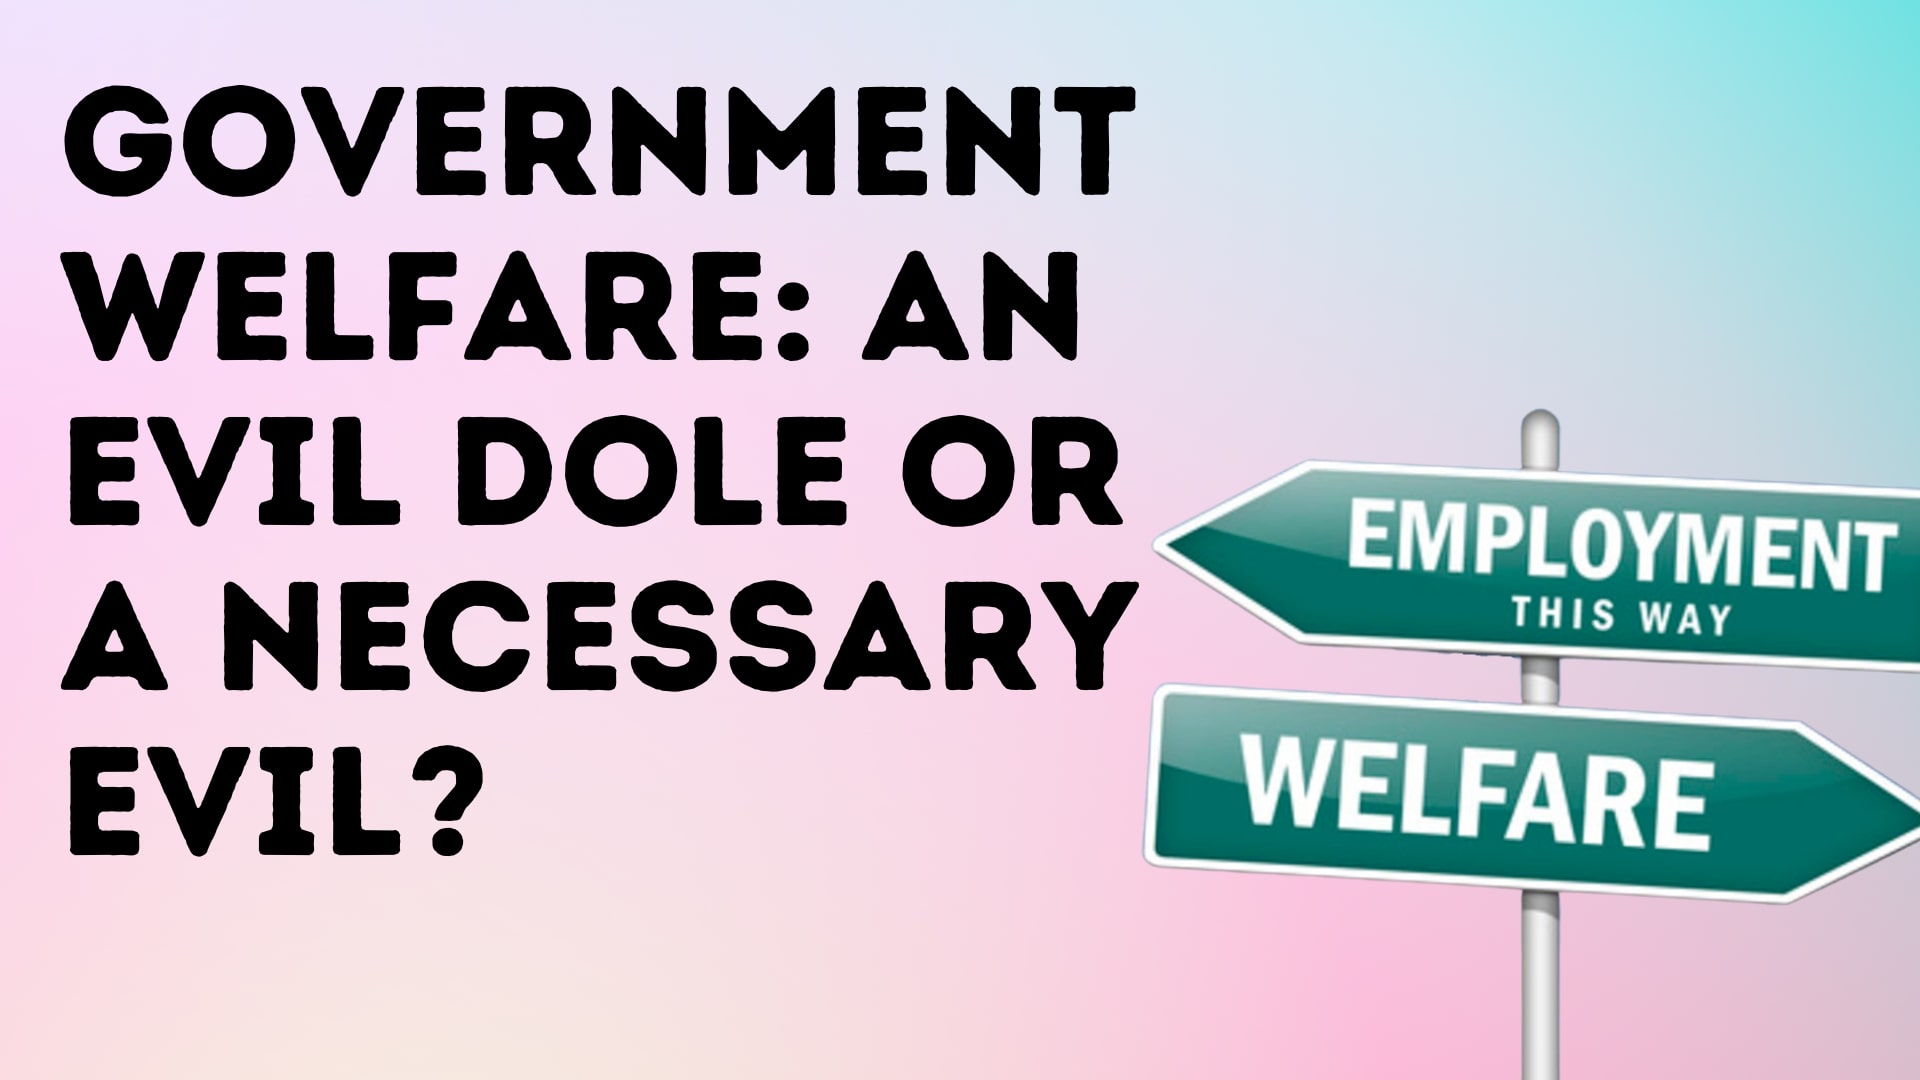 Government welfare: an evil dole or a necessary evil?